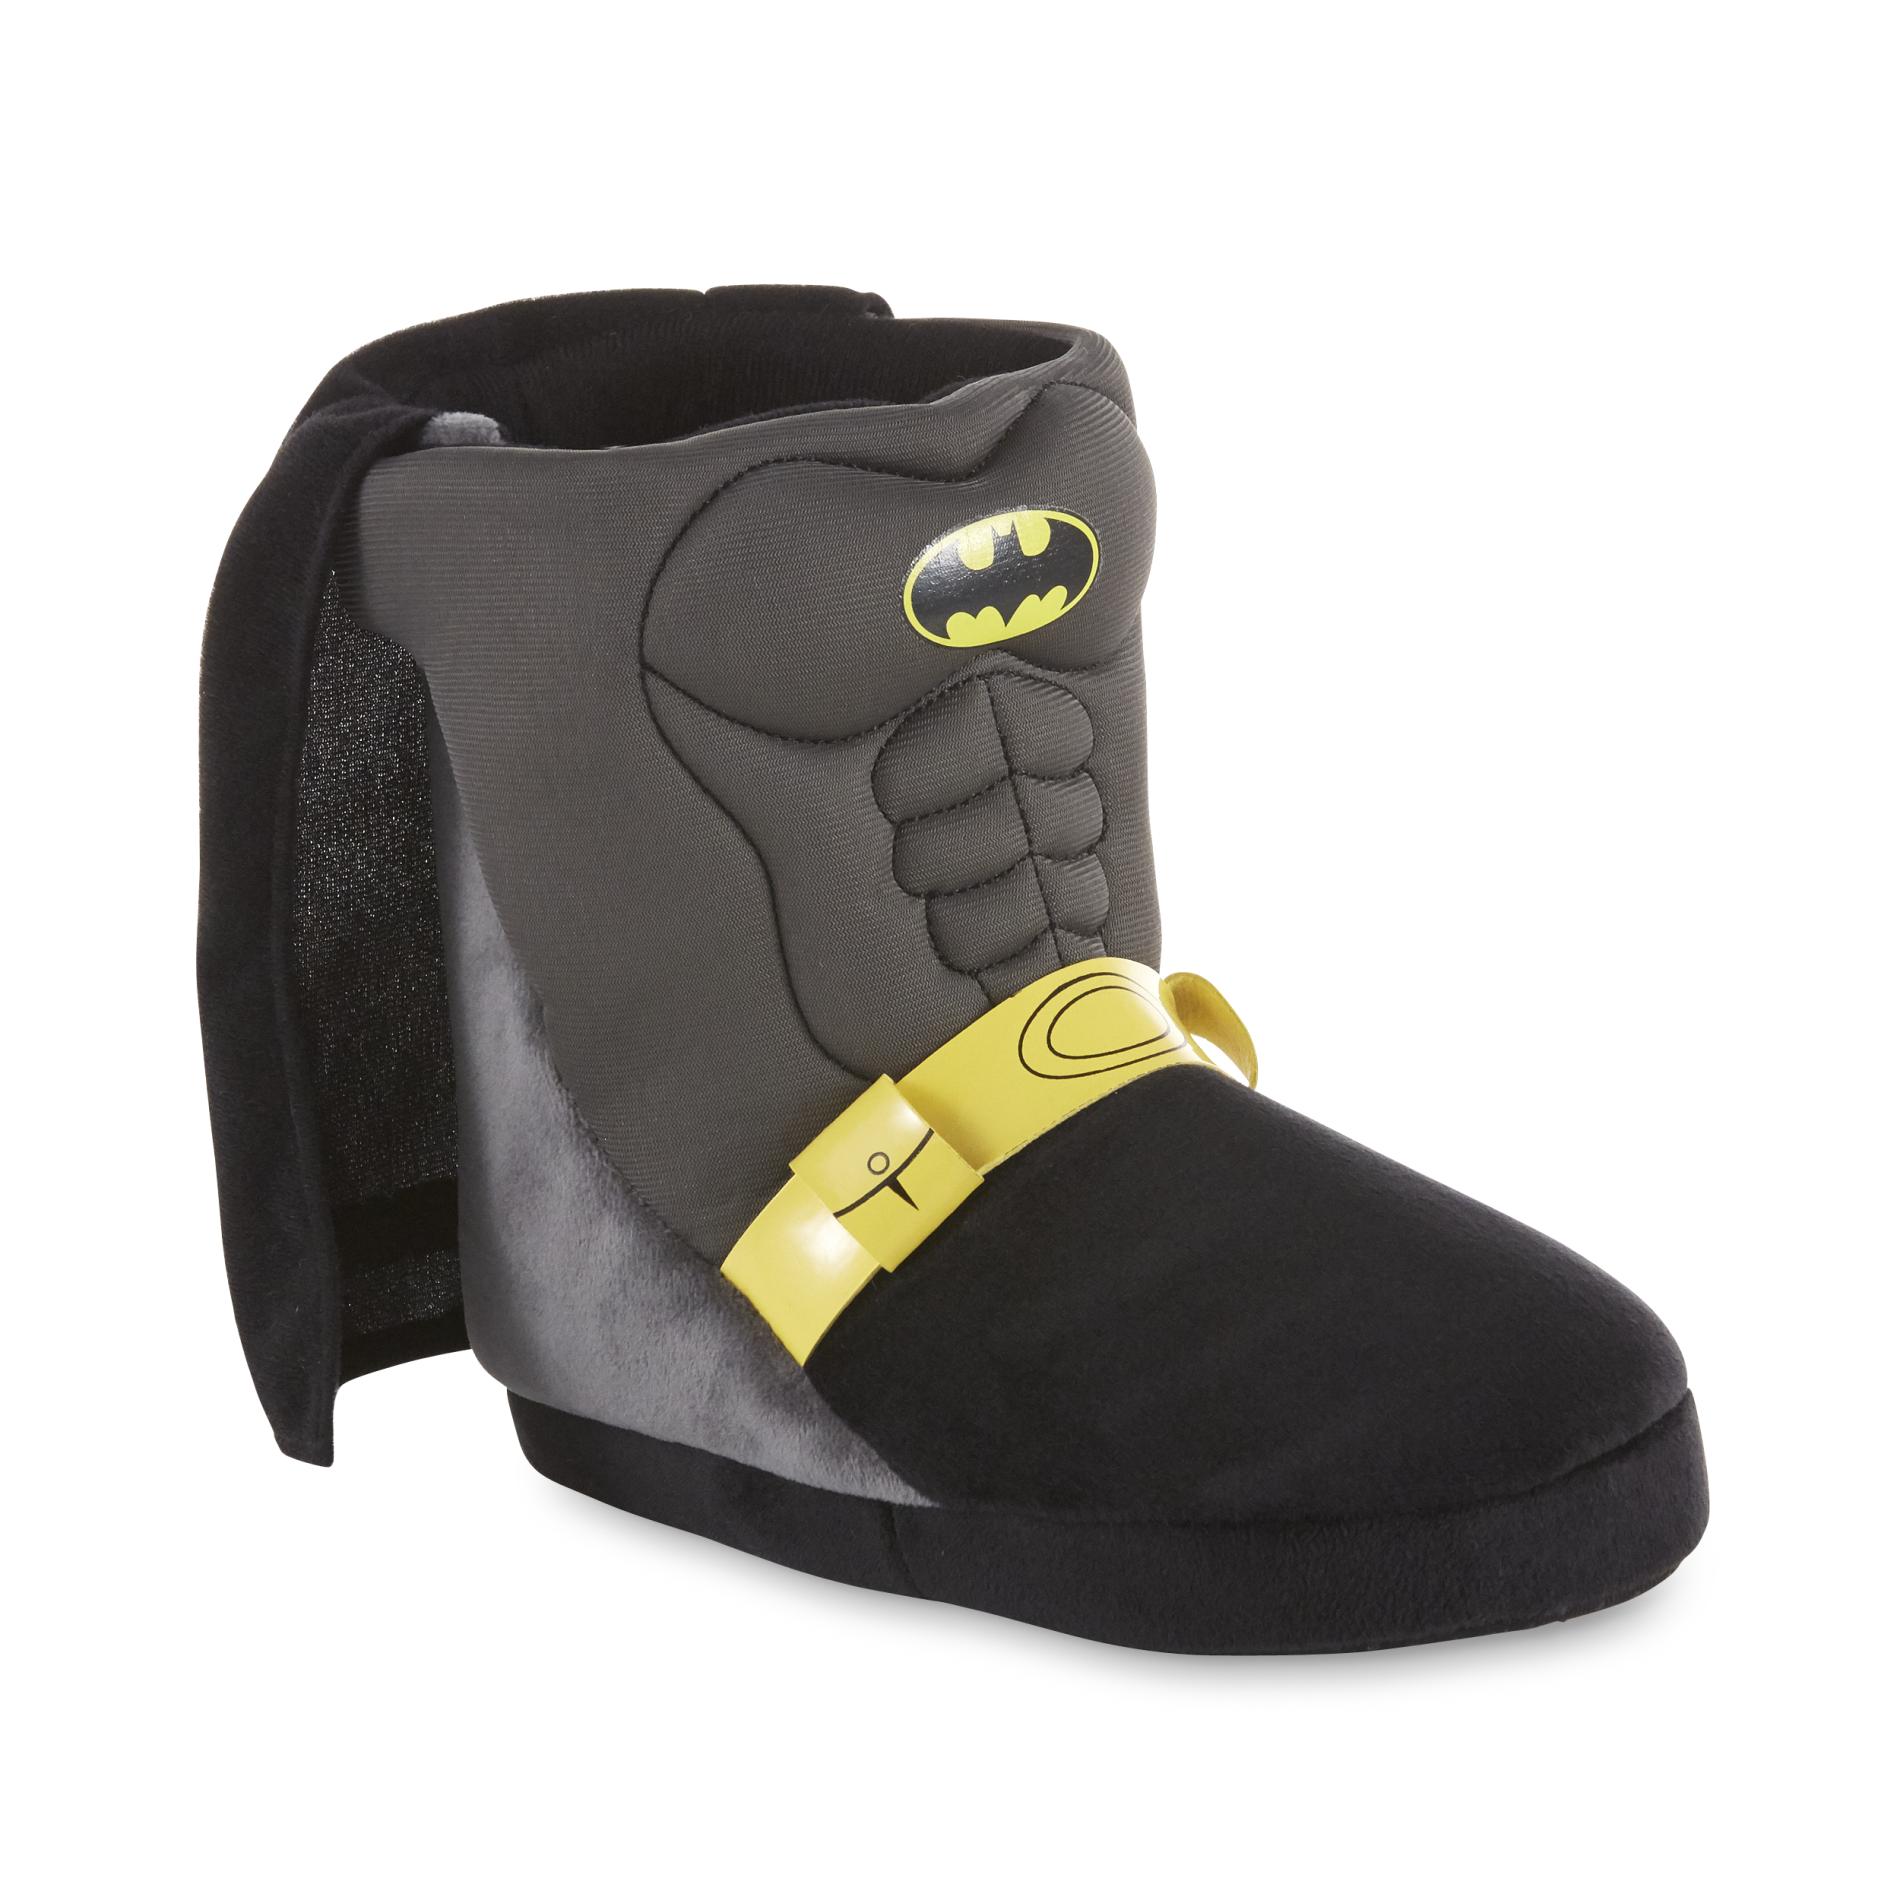 Character Boys' Batman Slipper Boot - Black/Gray